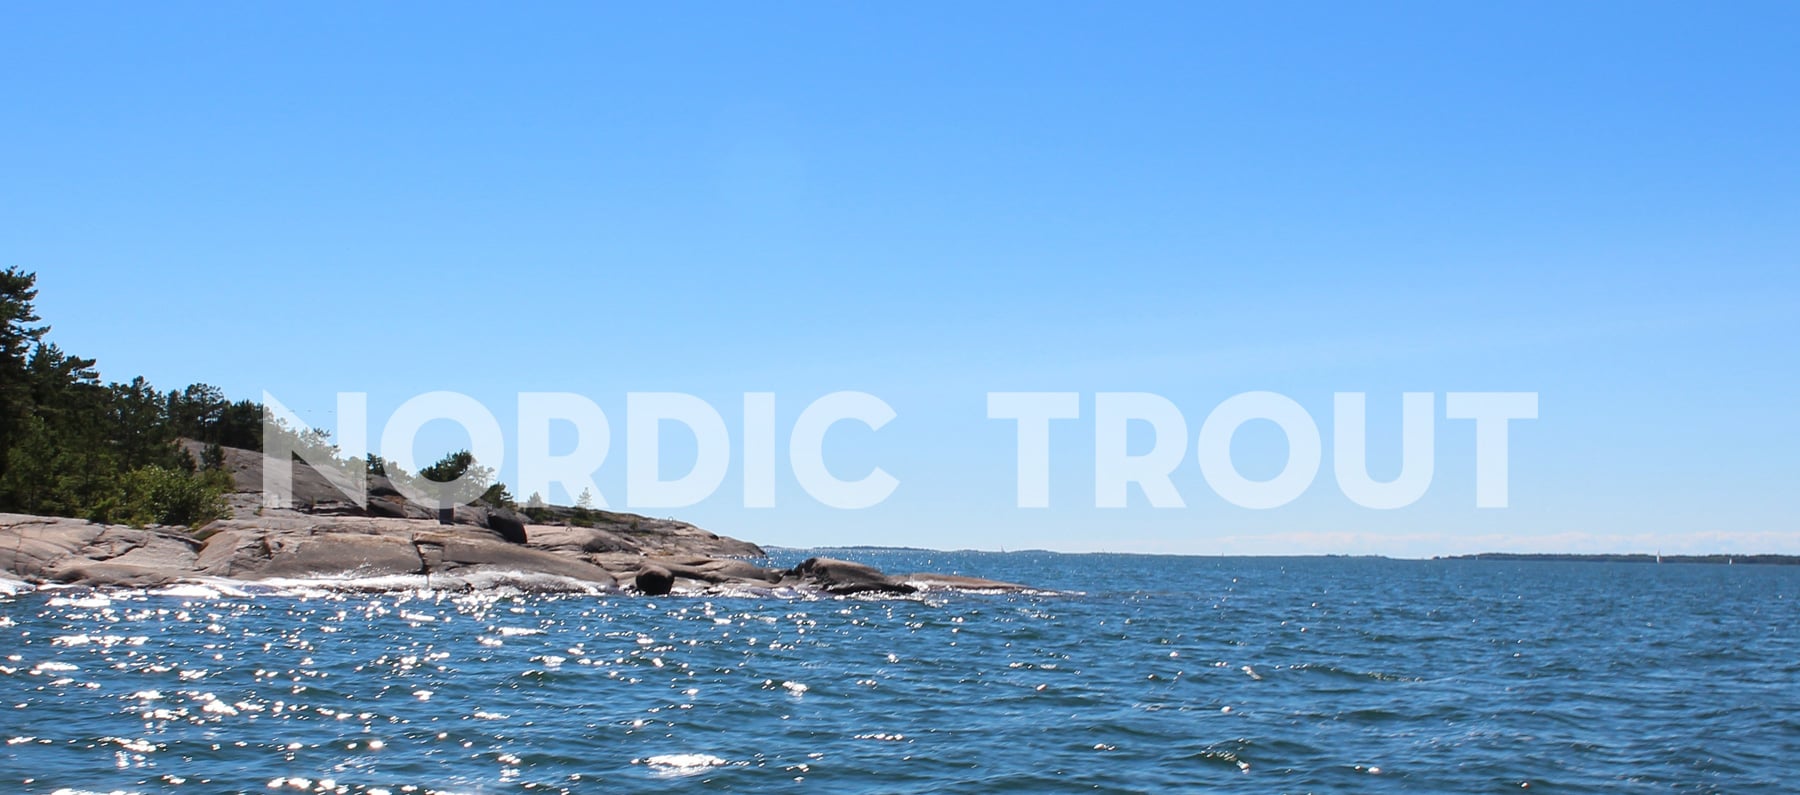 Nordic Trout